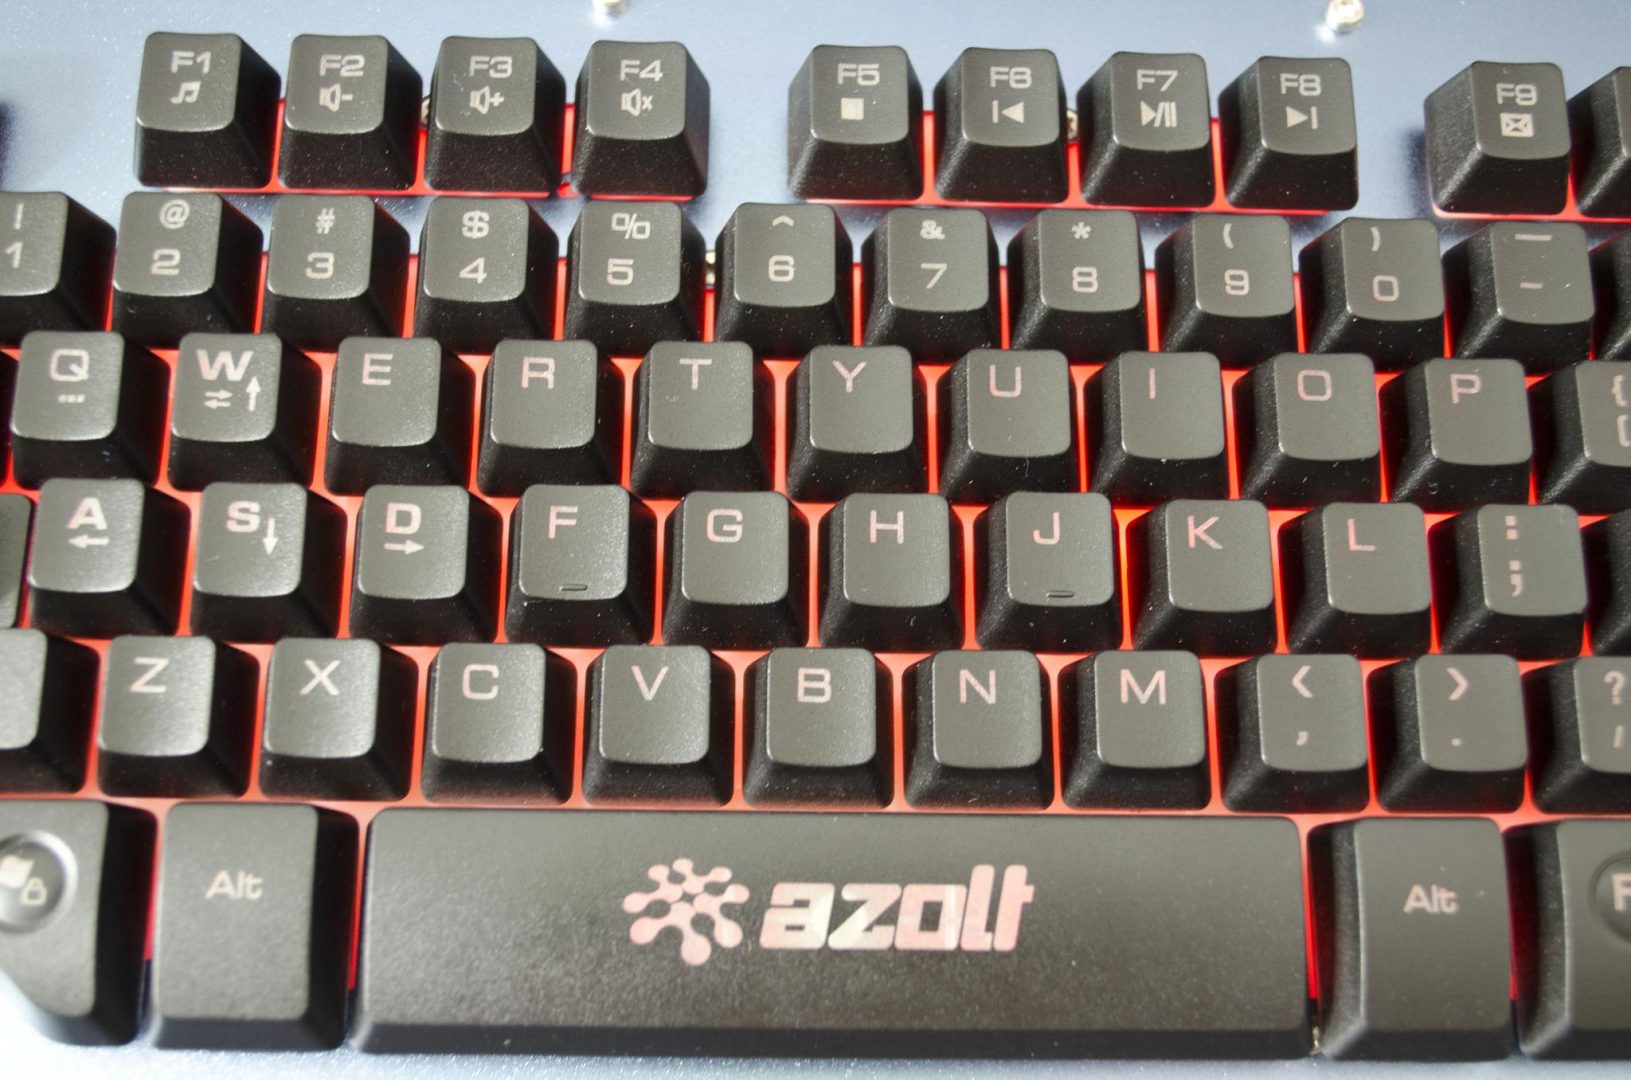 Azolt gCrusayder keyboard review_14